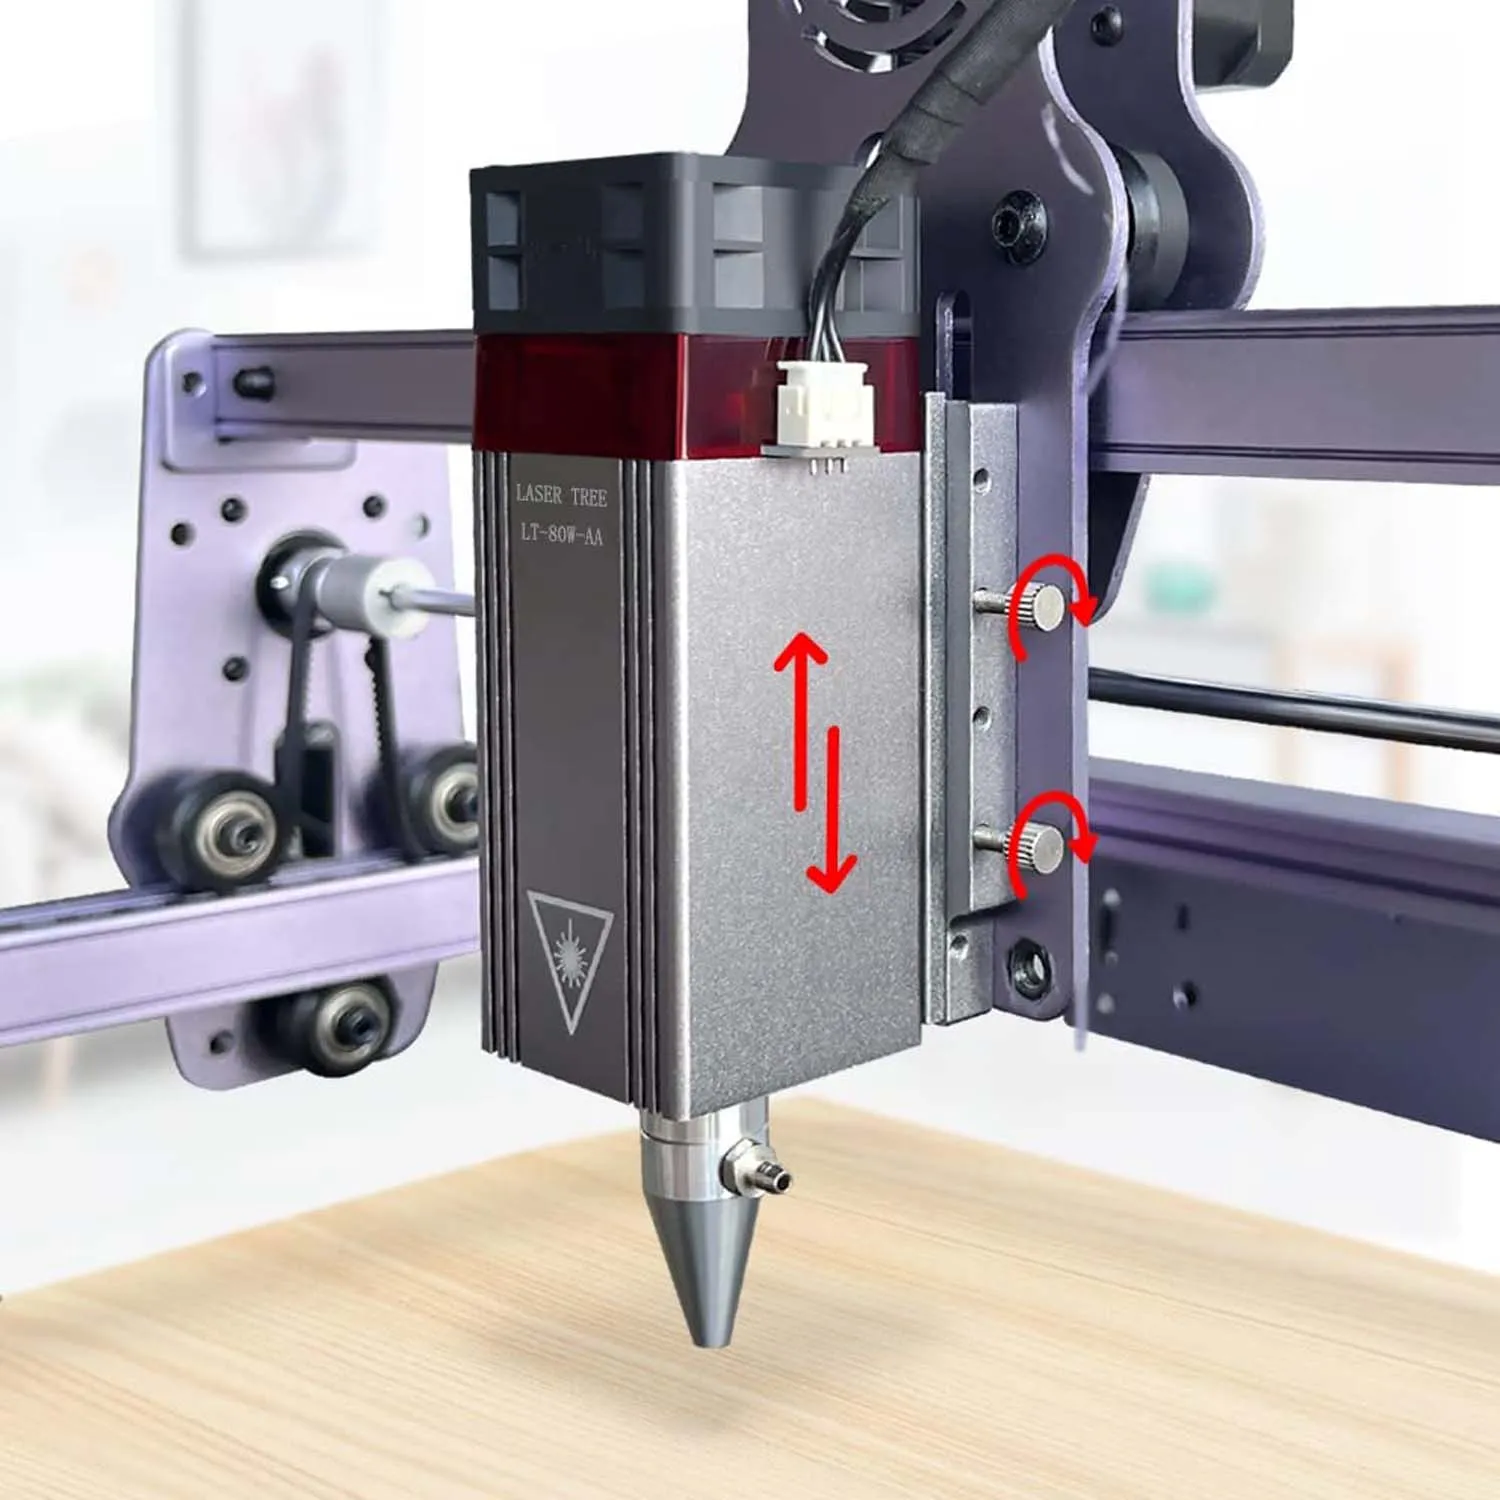 ZBAITU Laser Module Head Fixed Mounting Holder Adjustable Bracket Base For CNC Engraver Cutting Woodworking Machinery Parts enlarge